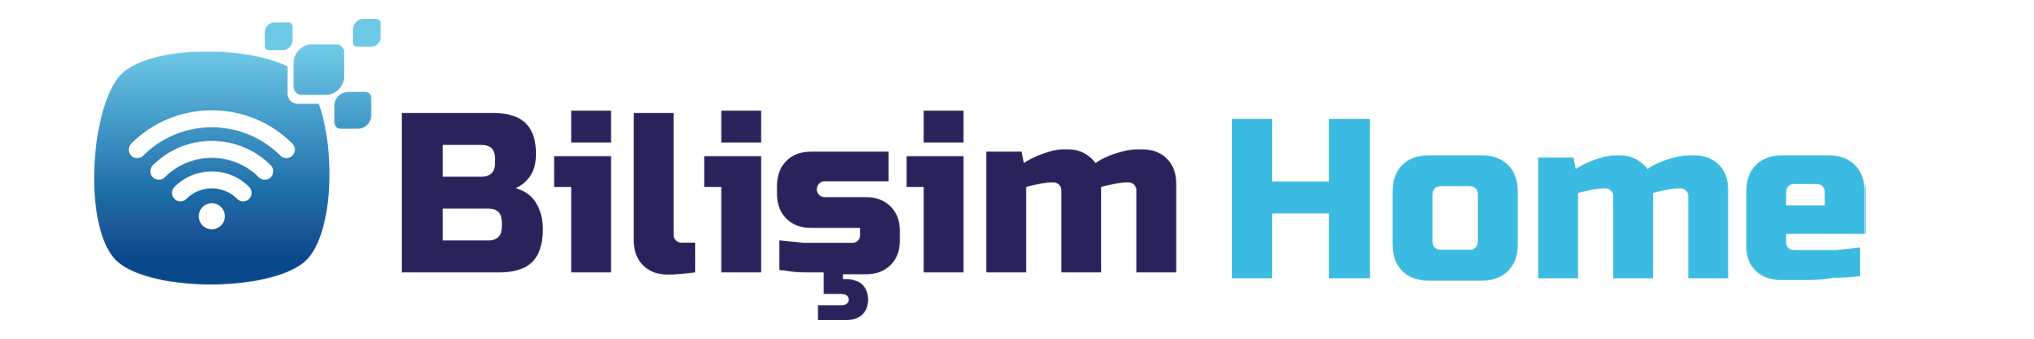 Bilisim-Home-logo-web